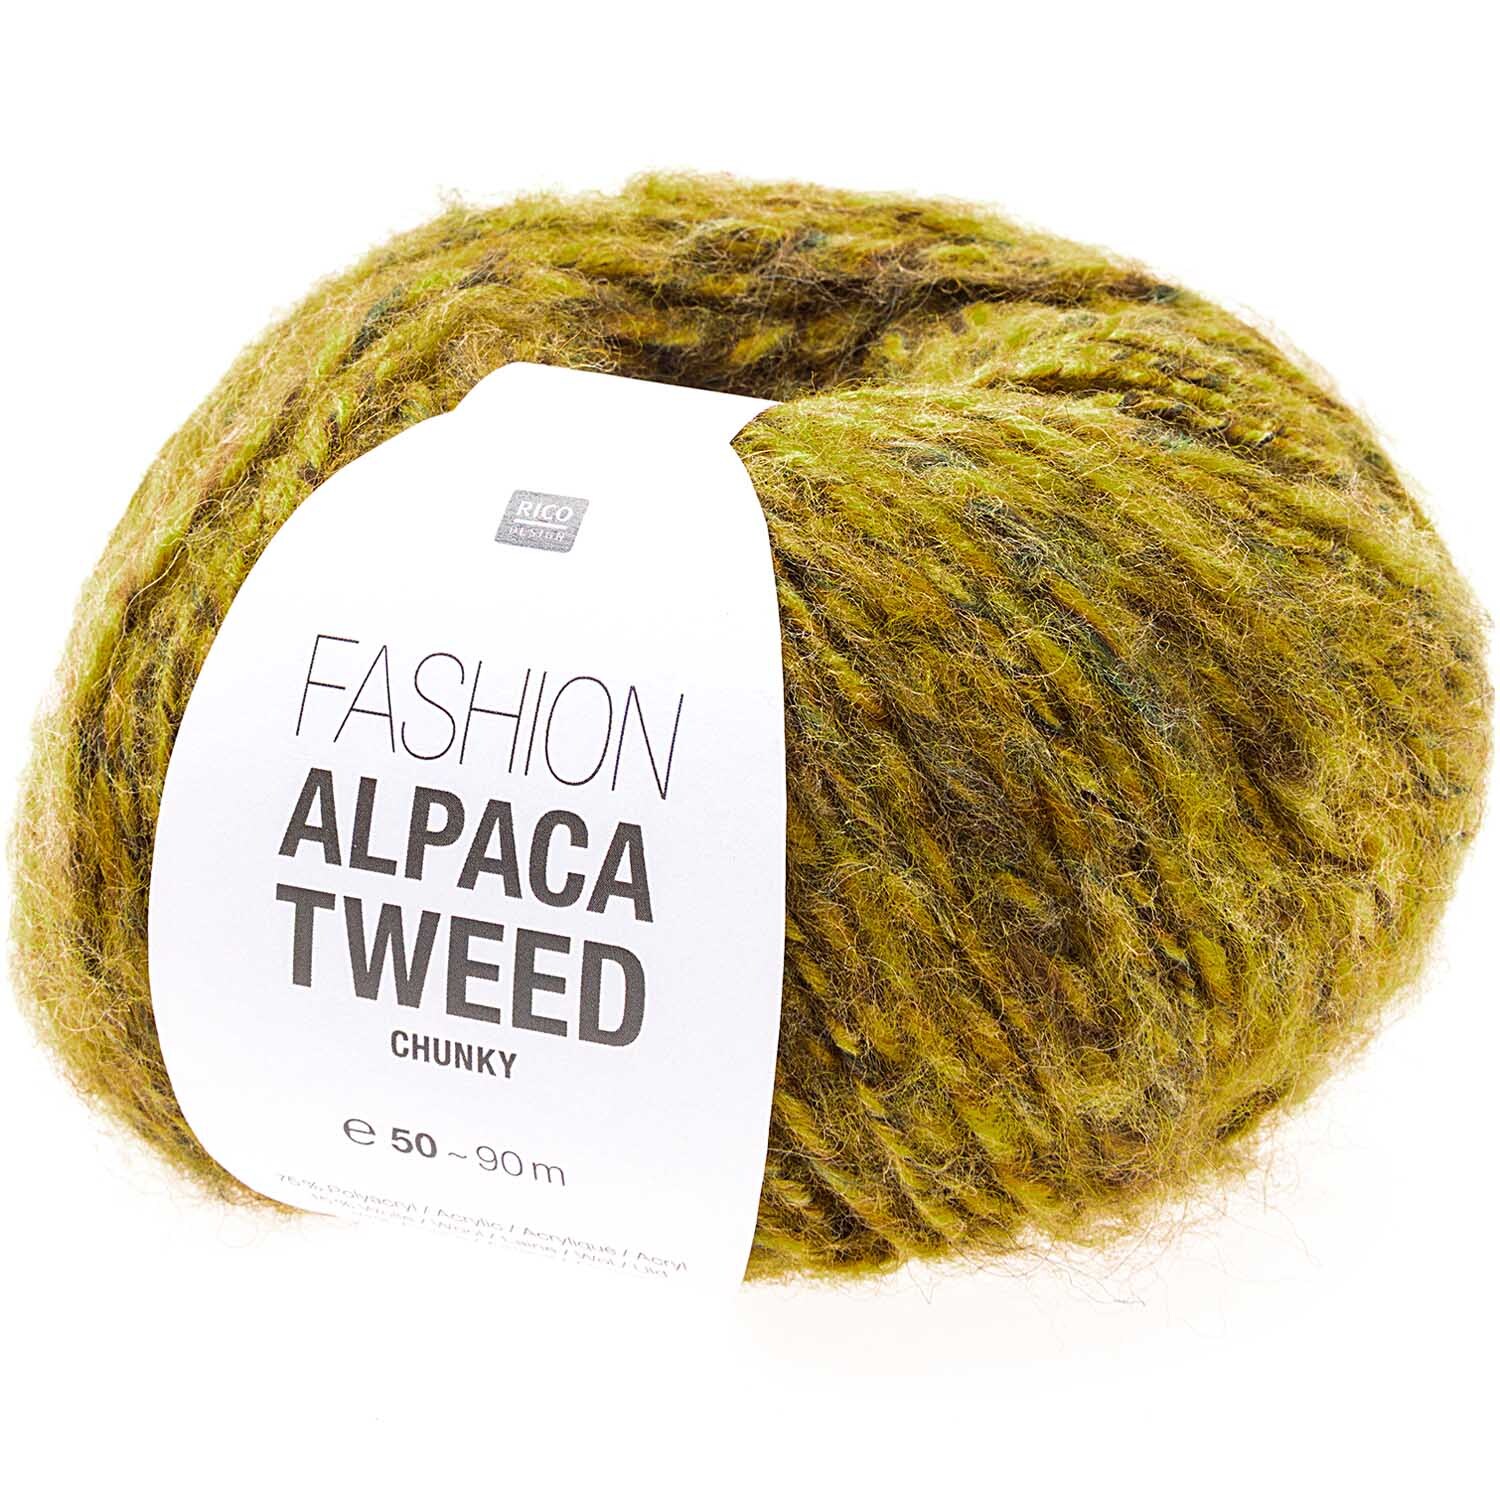 Fashion Alpaca Tweed chunky